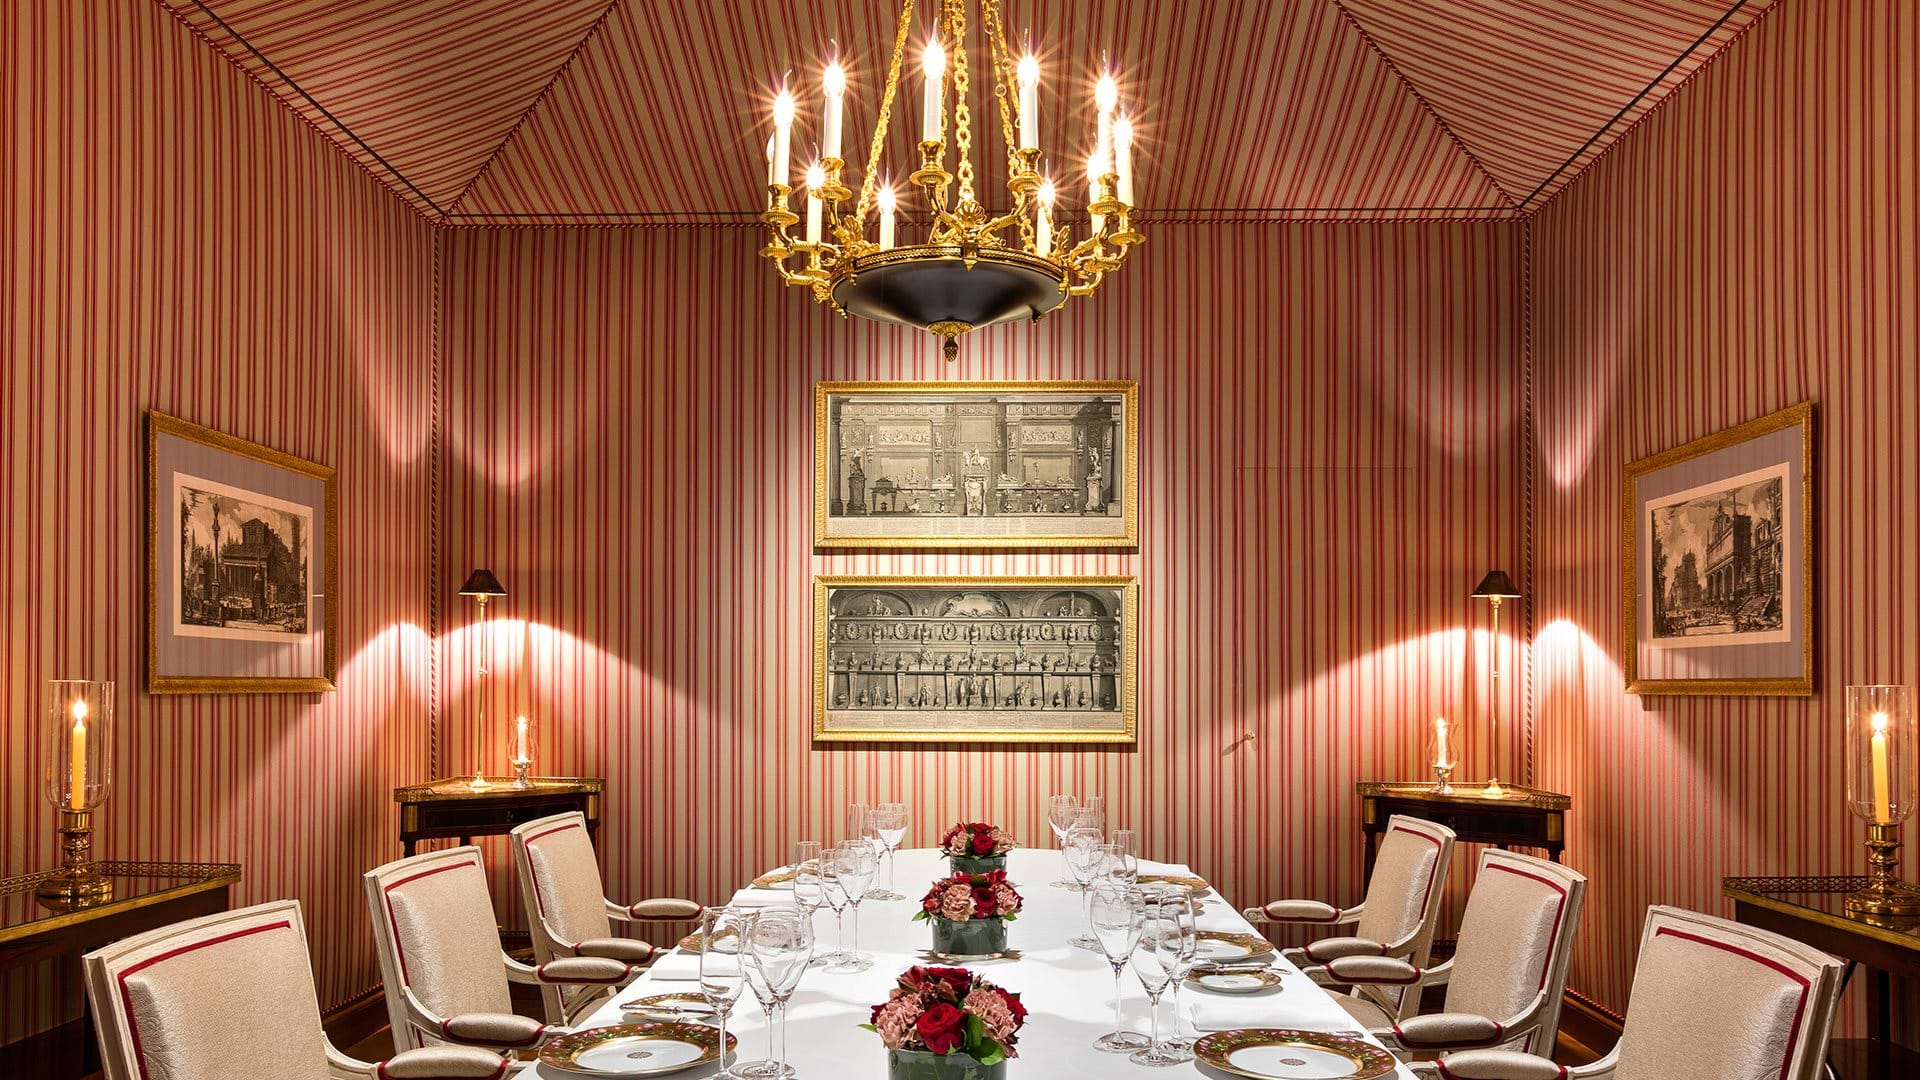 Salon Marigny - Private Dining in Paris | Le Bristol